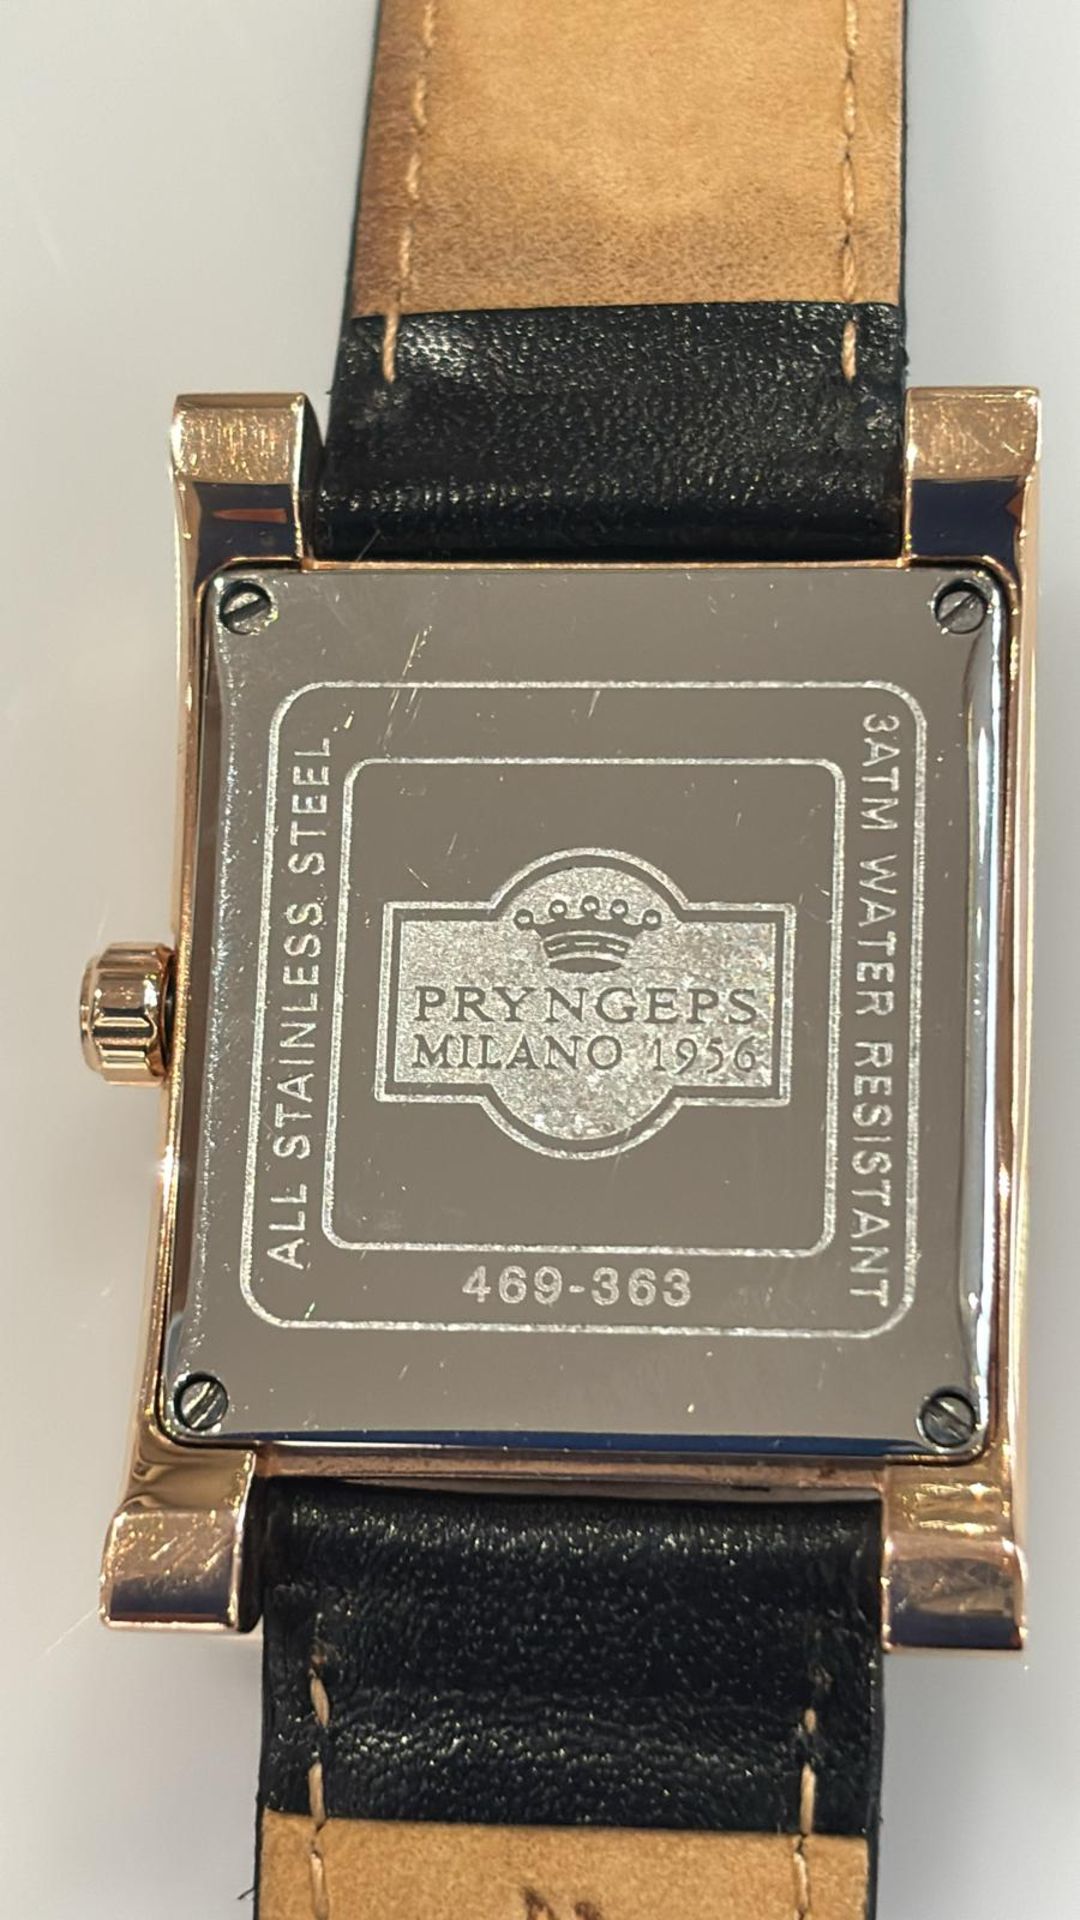 Italian Pryngeps Milano 469-363 Rose Gold Watch - Image 2 of 5